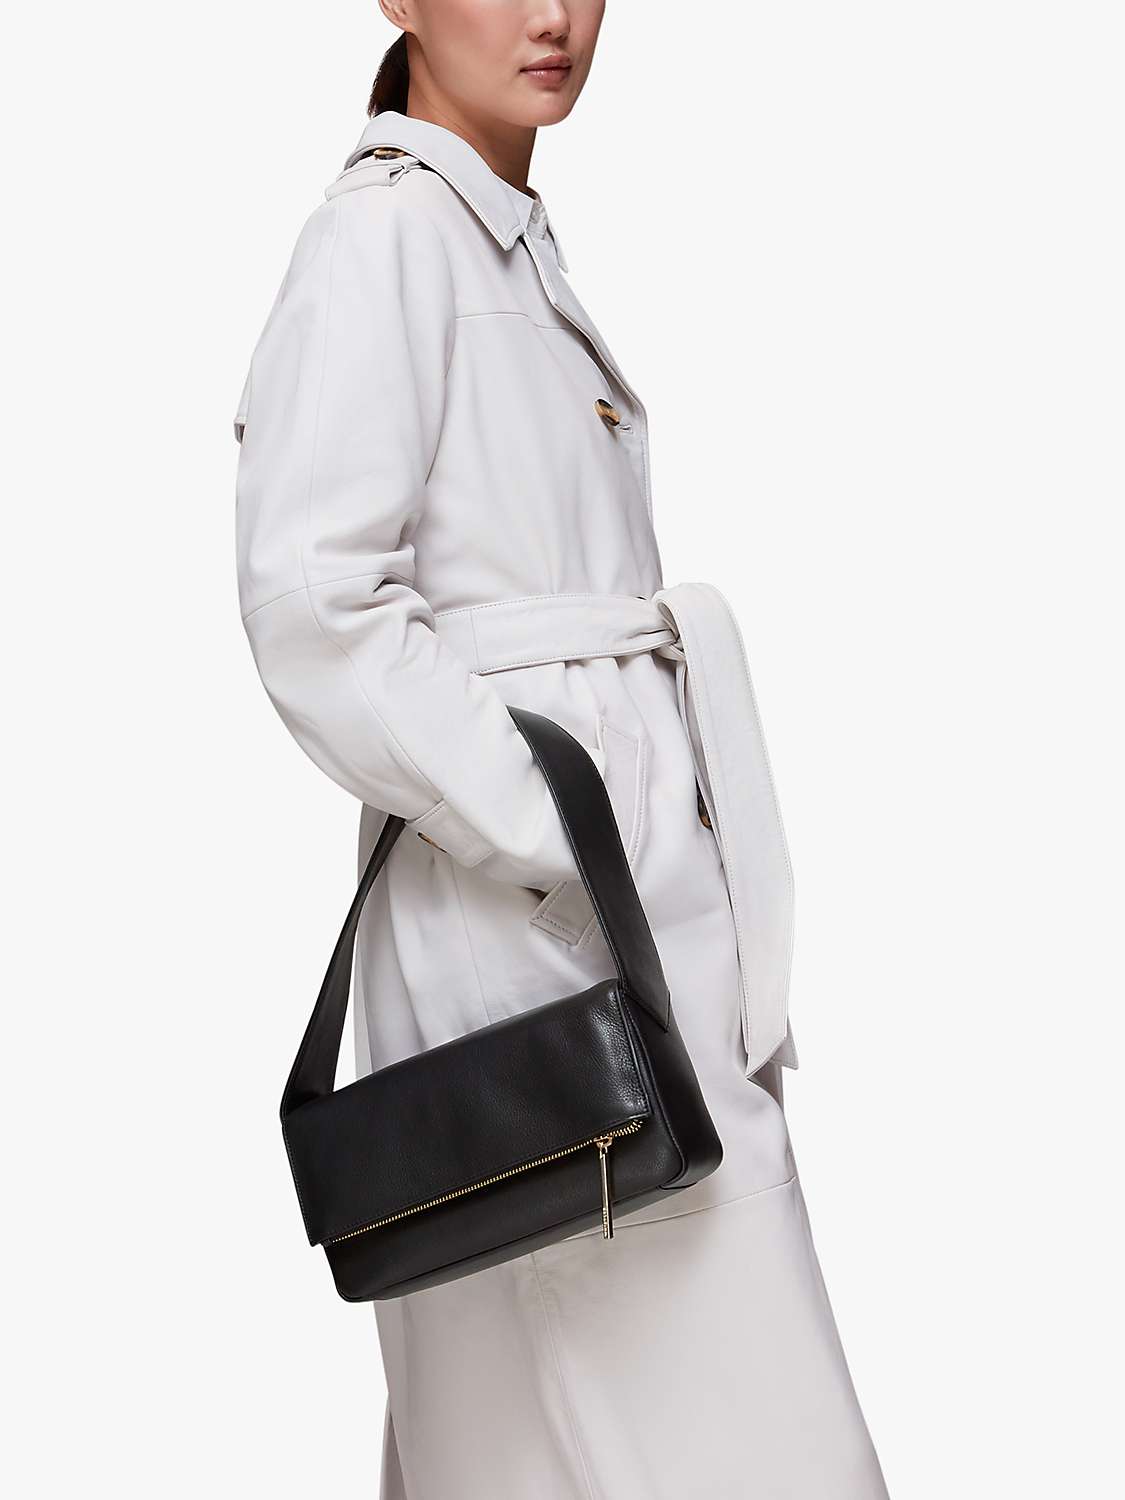 Whistles Bibi Leather Shoulder Bag, Black at John Lewis & Partners